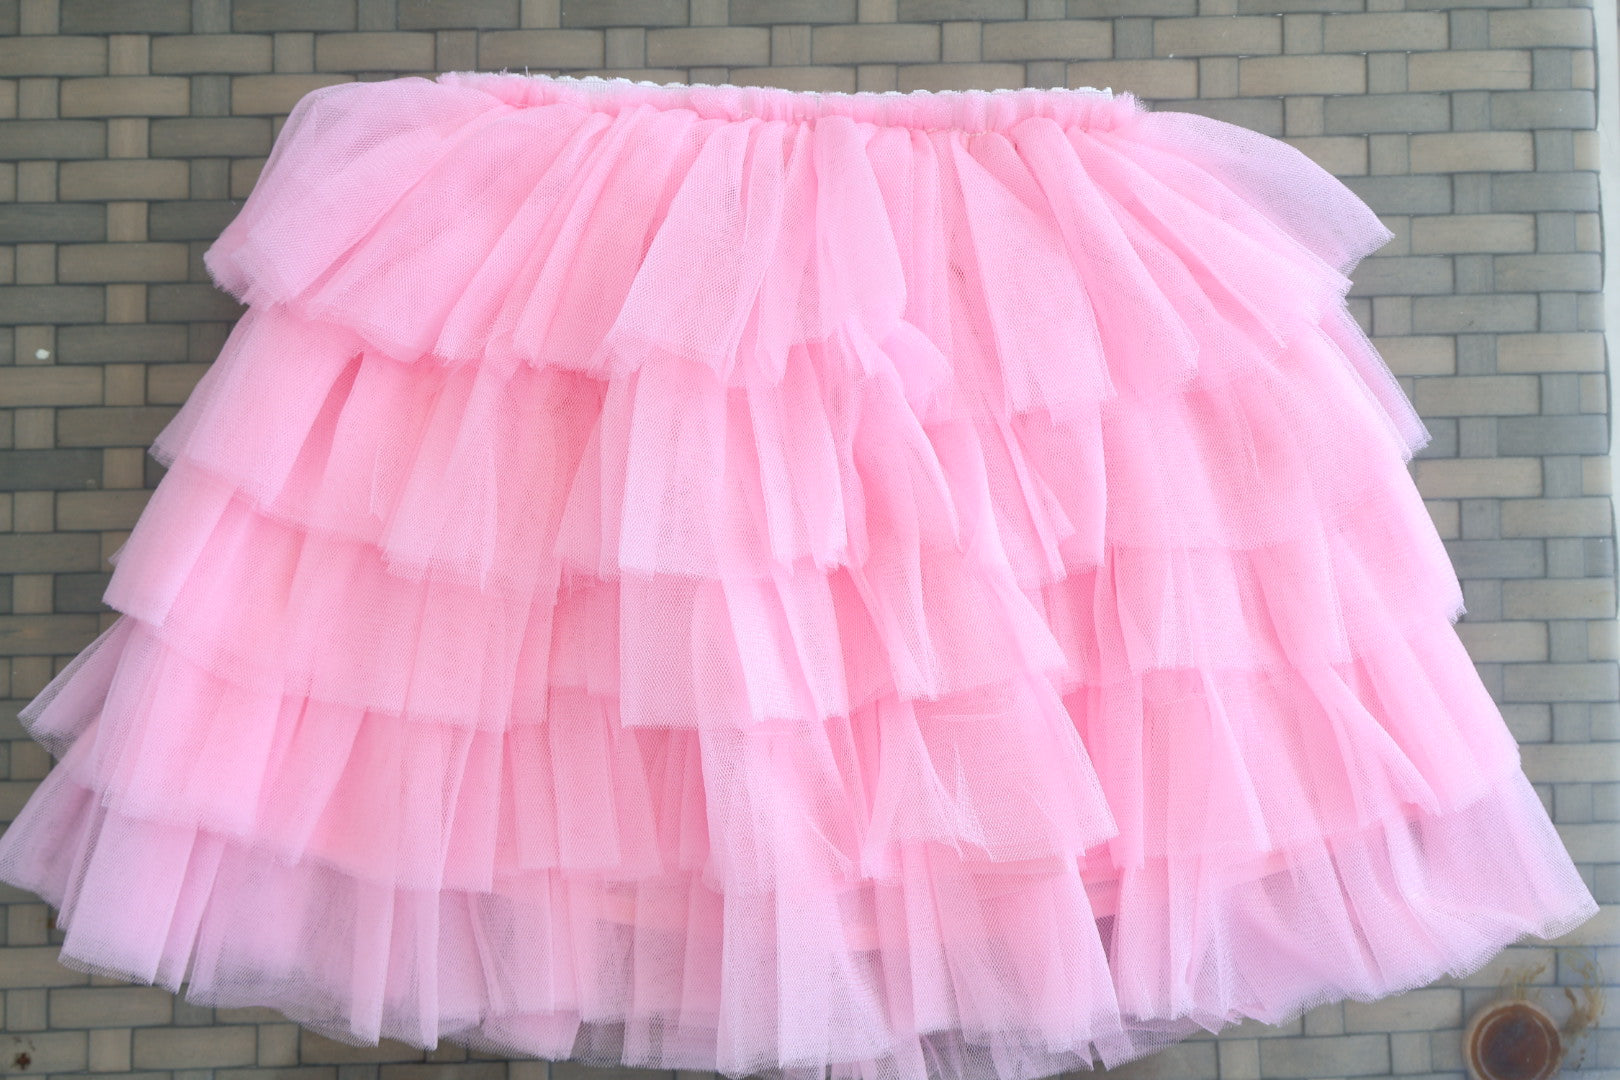 Pink Tutu skirt